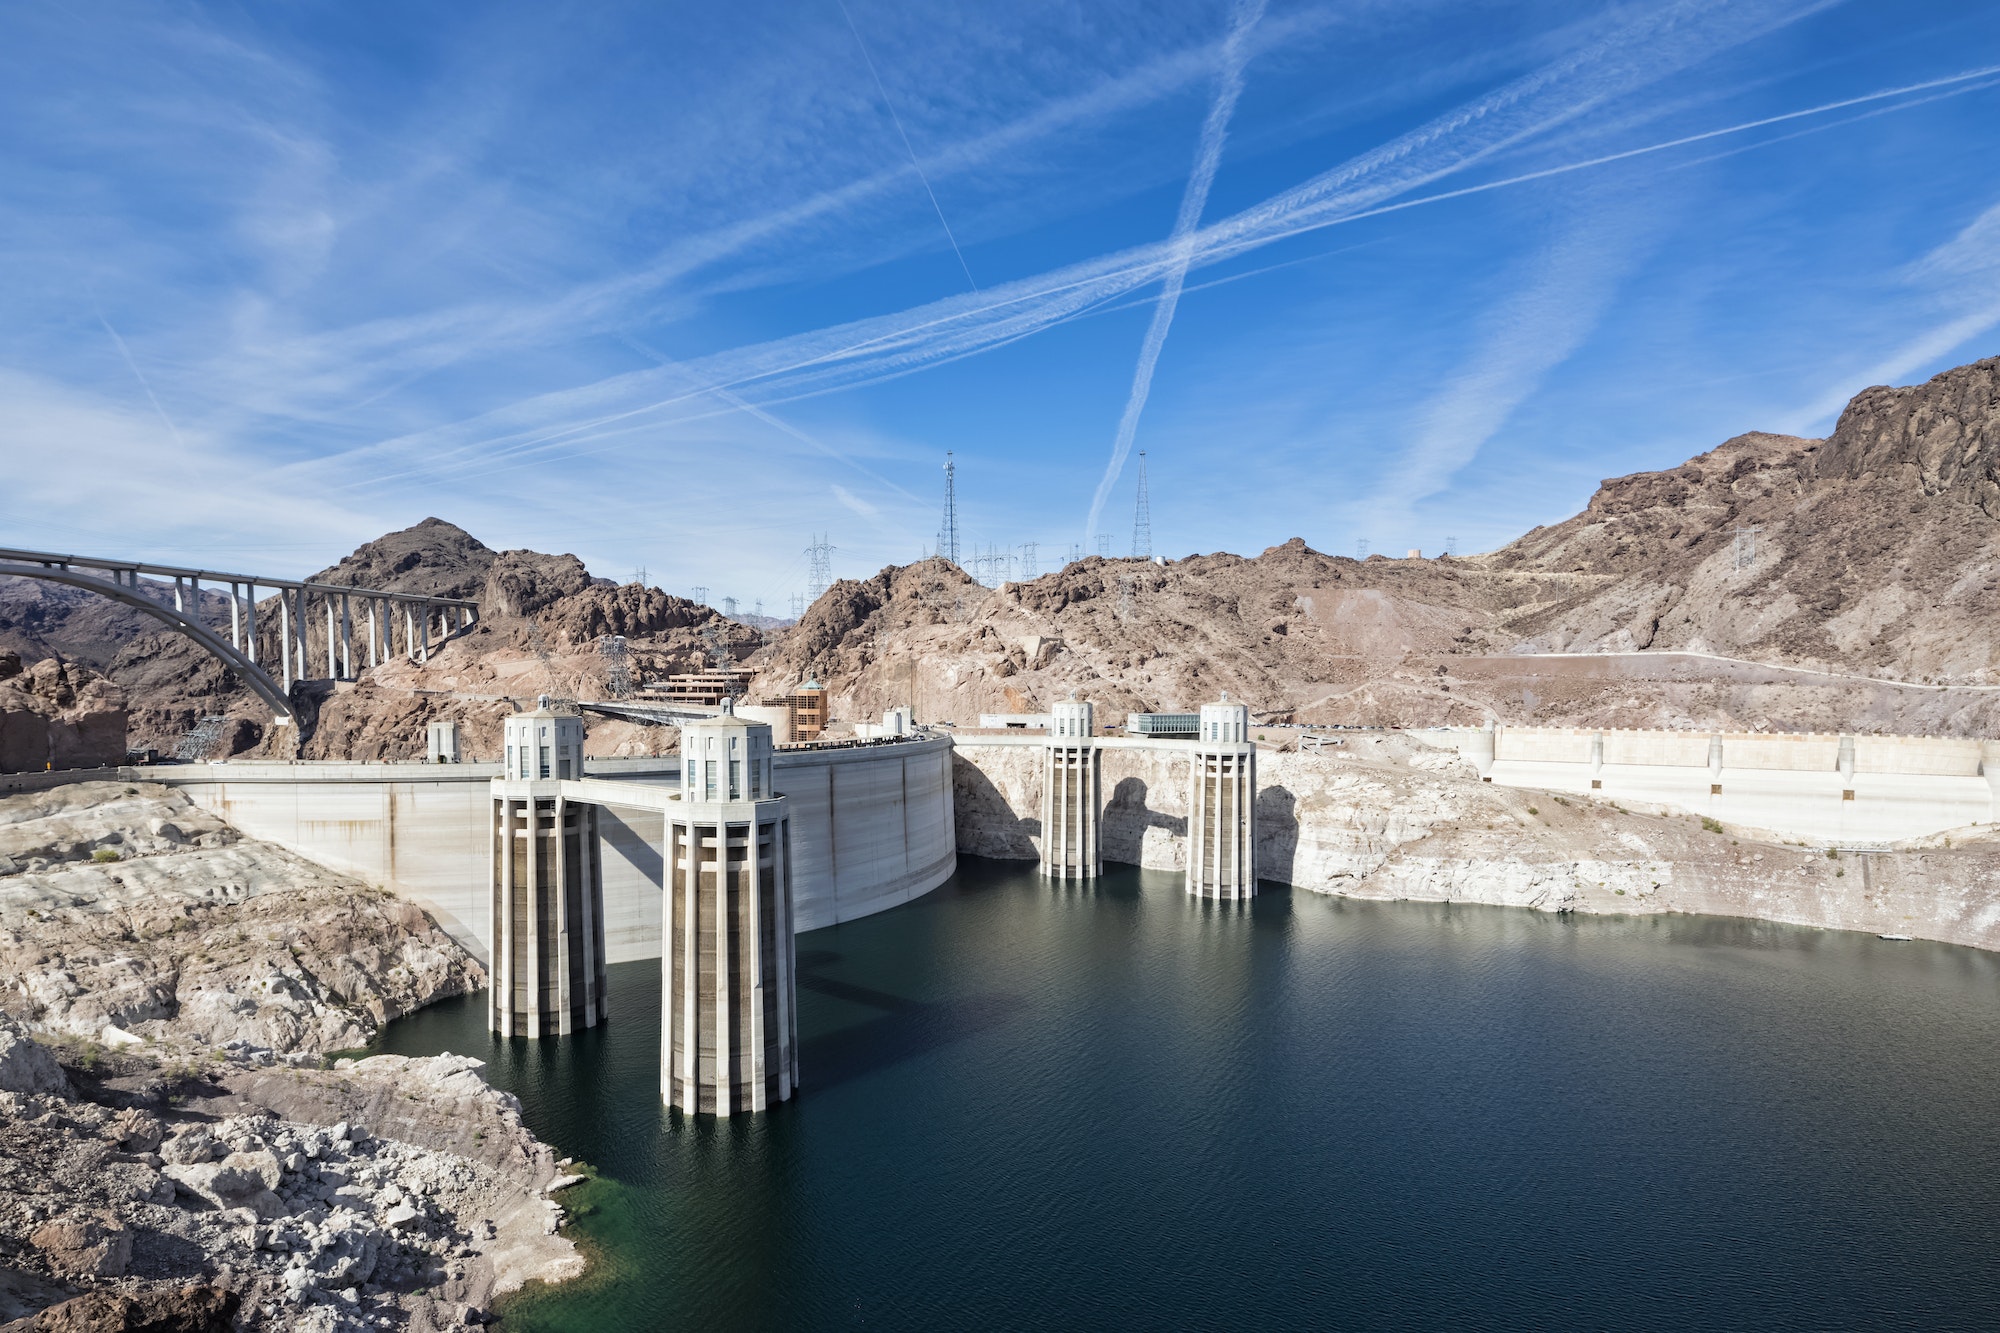 USA, Nevada, Arizona, Lake Mead, Colorado River, Hoover Dam, penstock towers